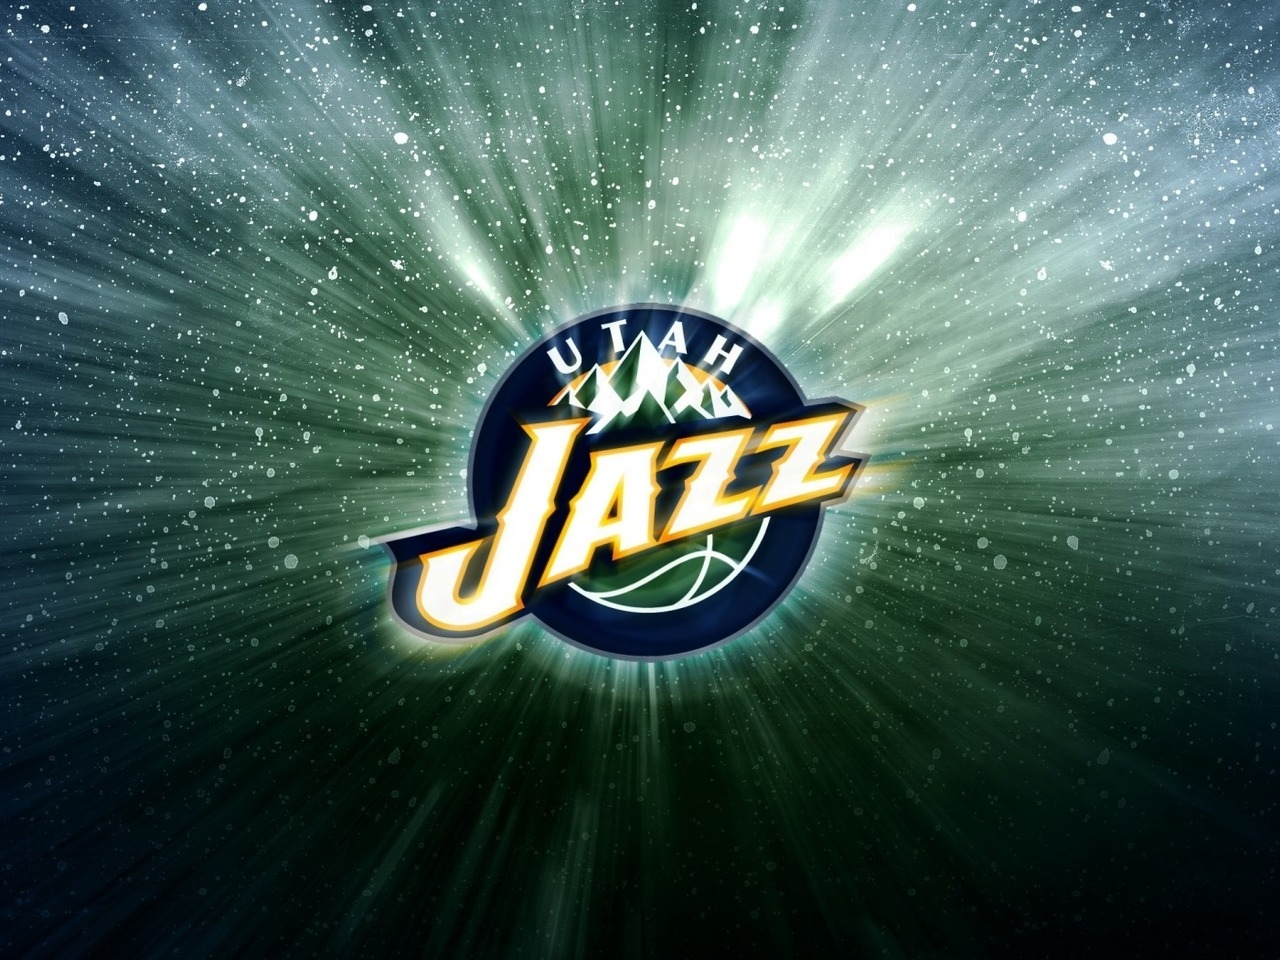 Utah Jazz  for 1280 x 960 resolution